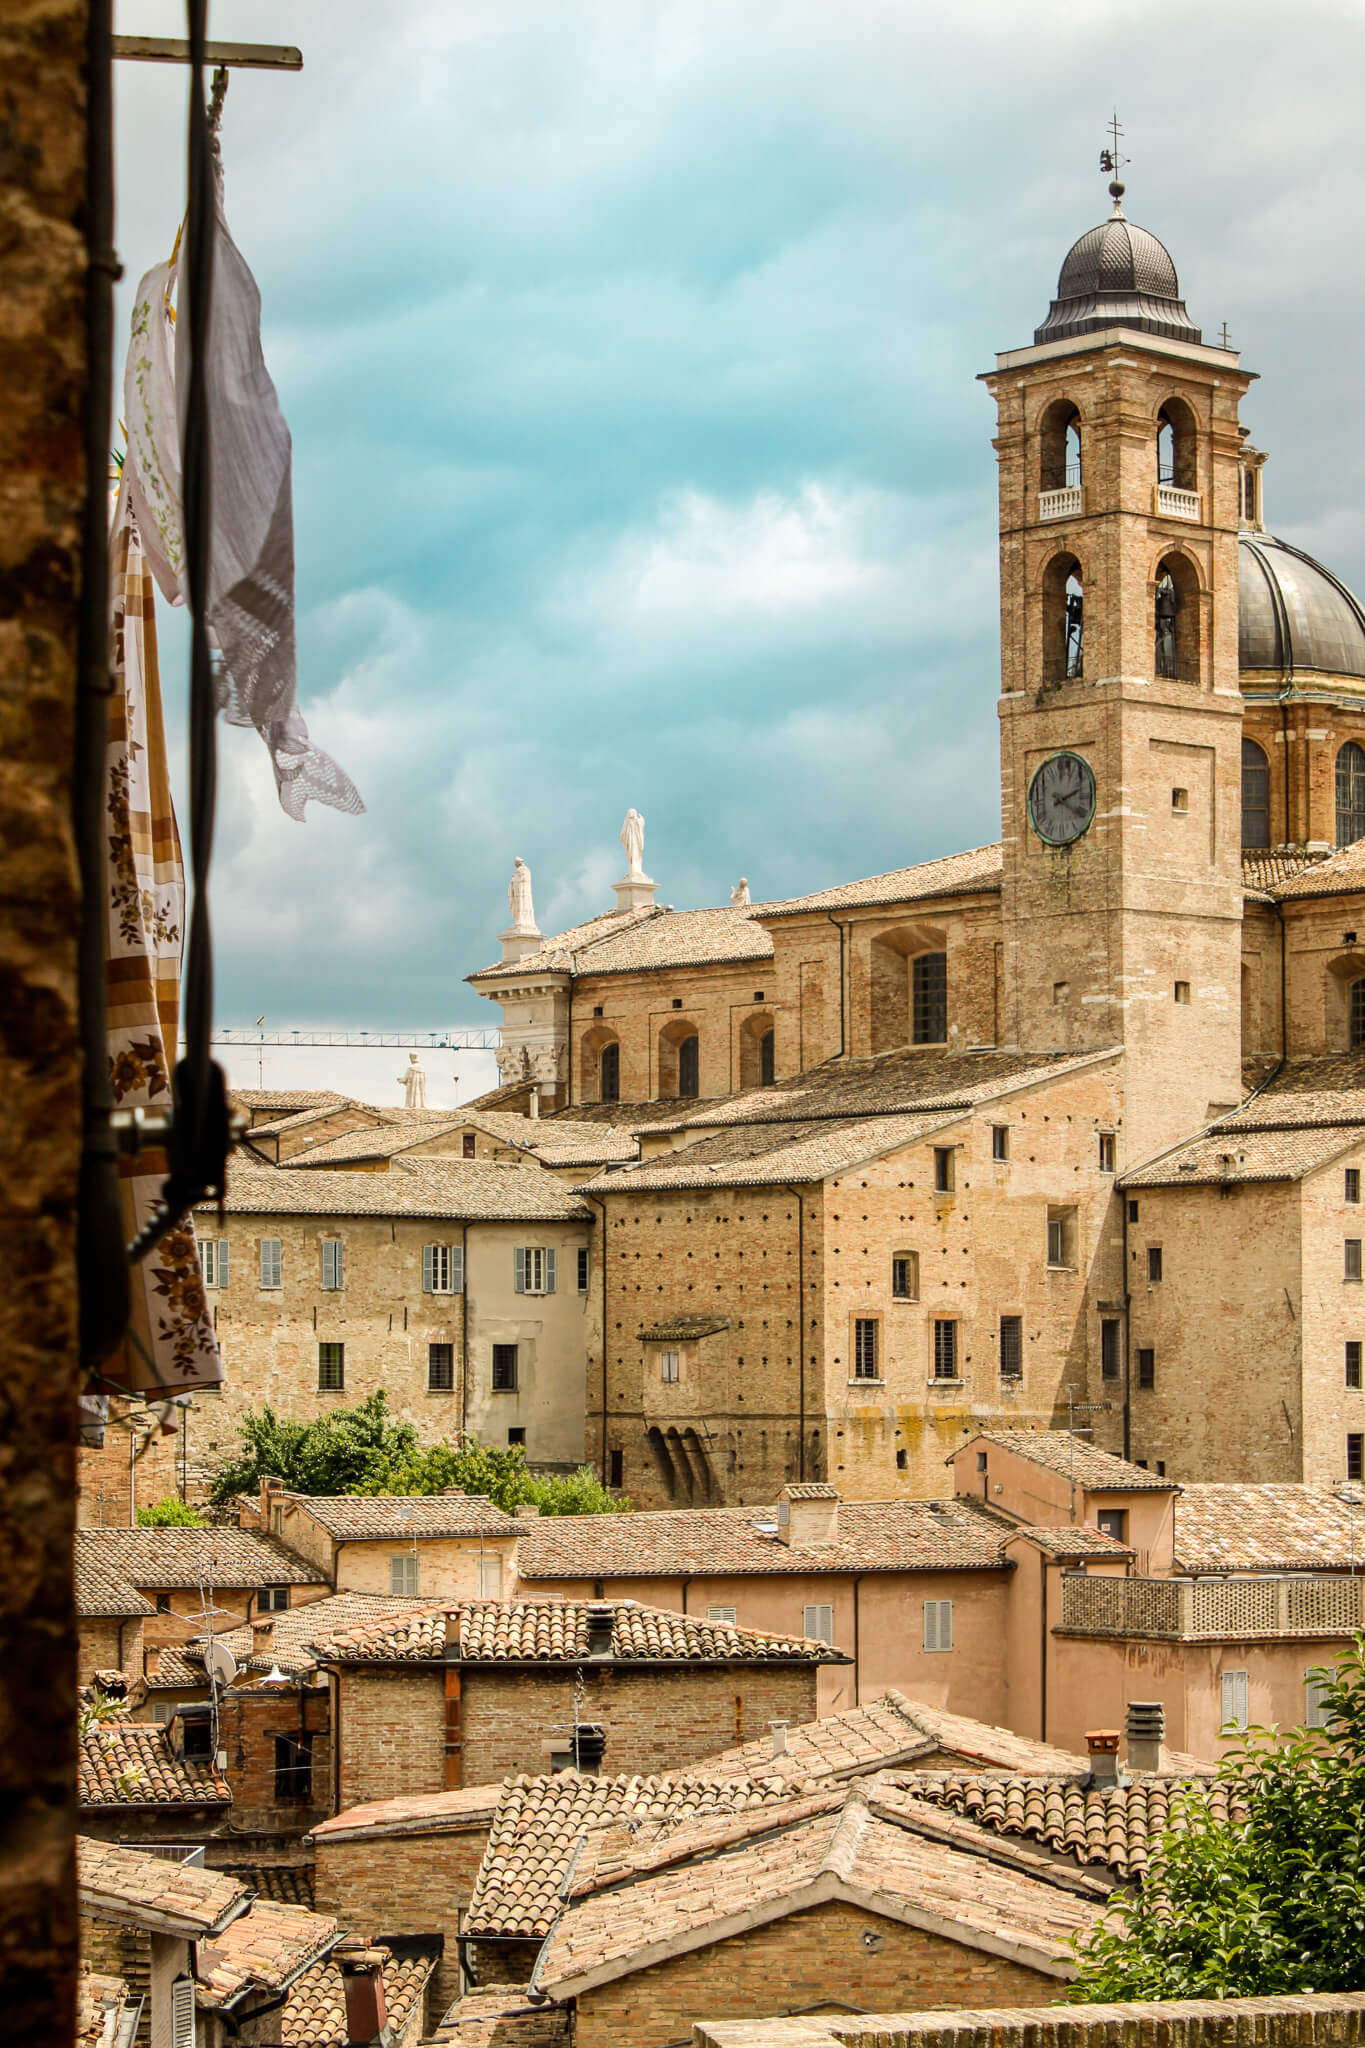 View of the Duomo di Urbino